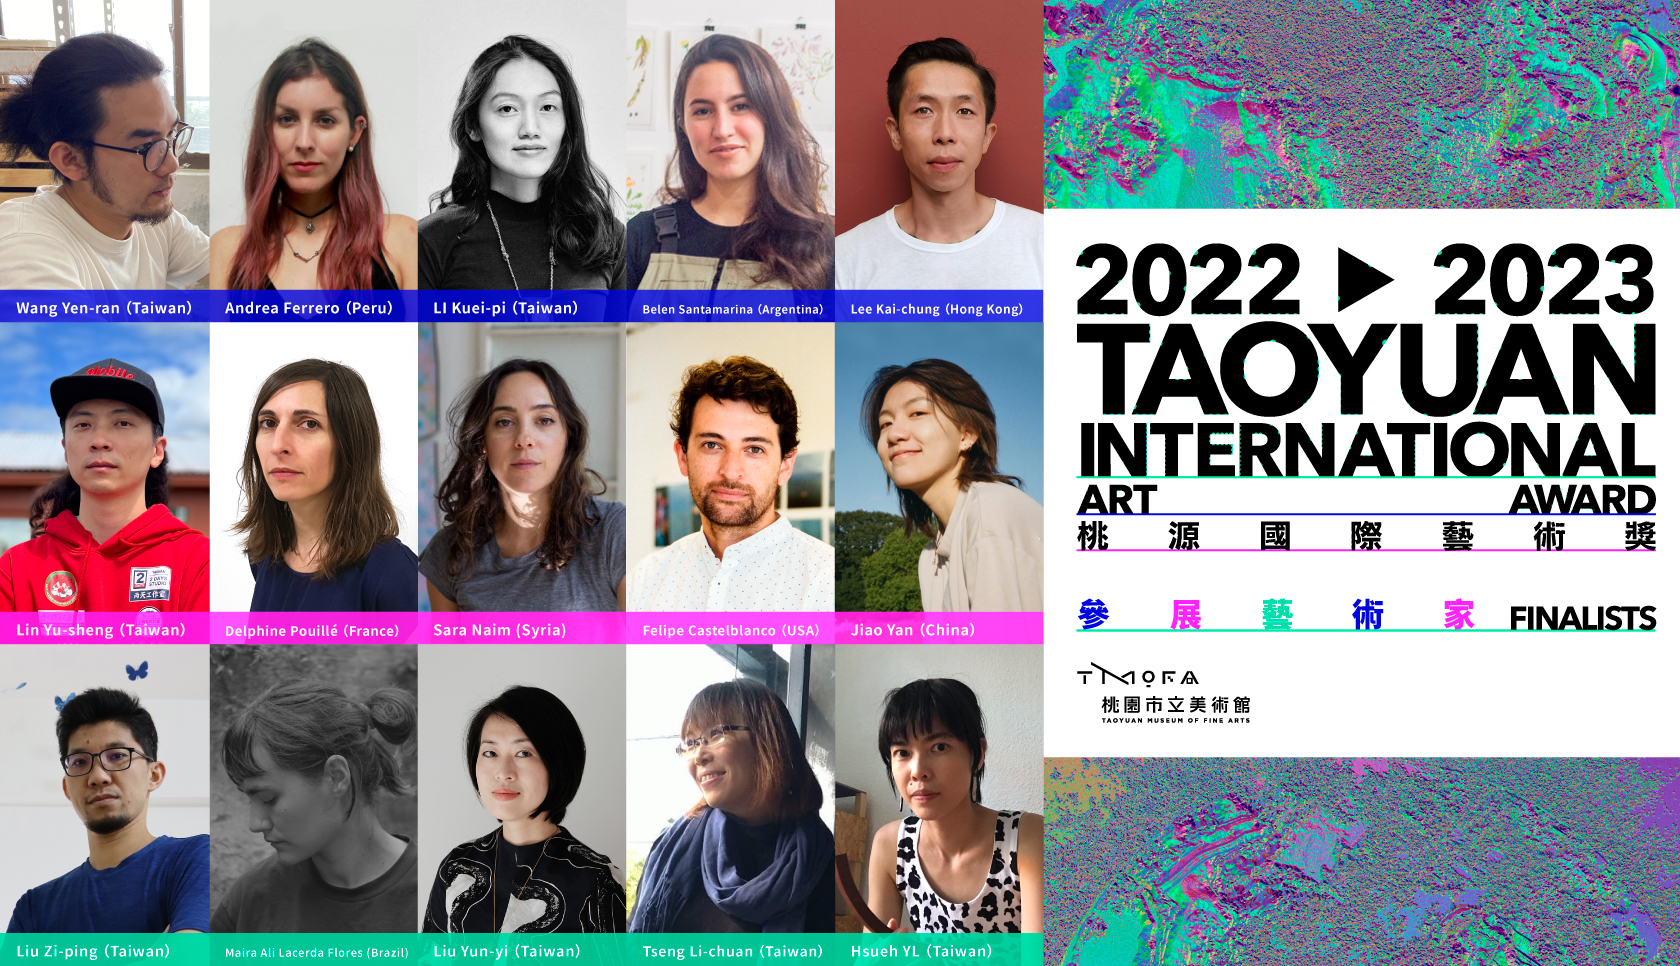 2023 Taoyuan International Art Award